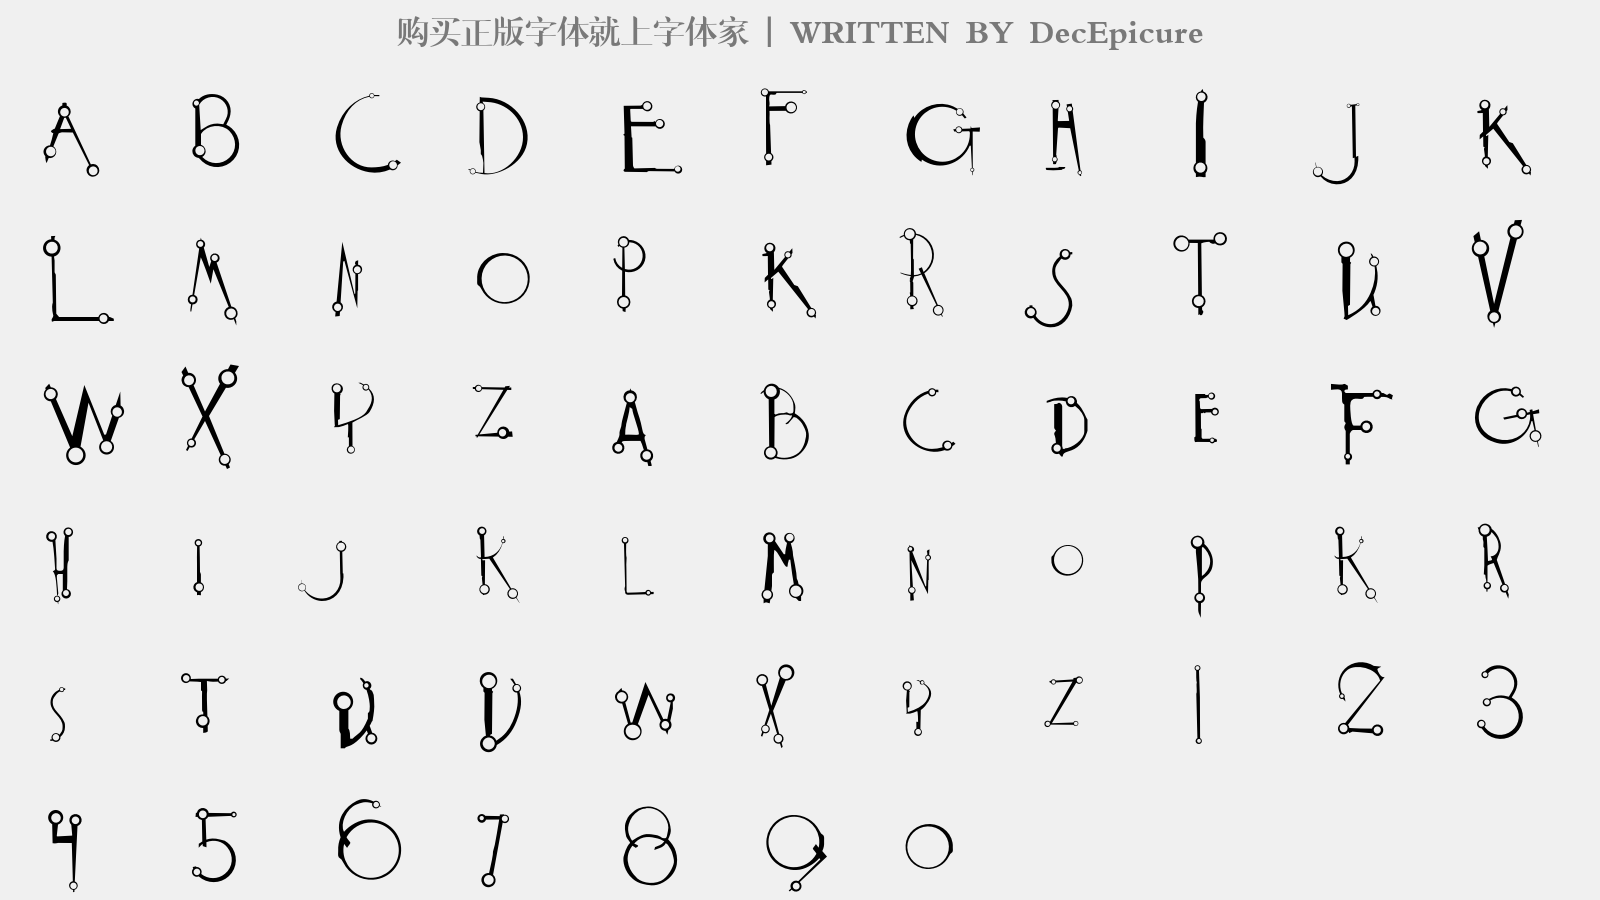 DecEpicure - 大写字母/小写字母/数字